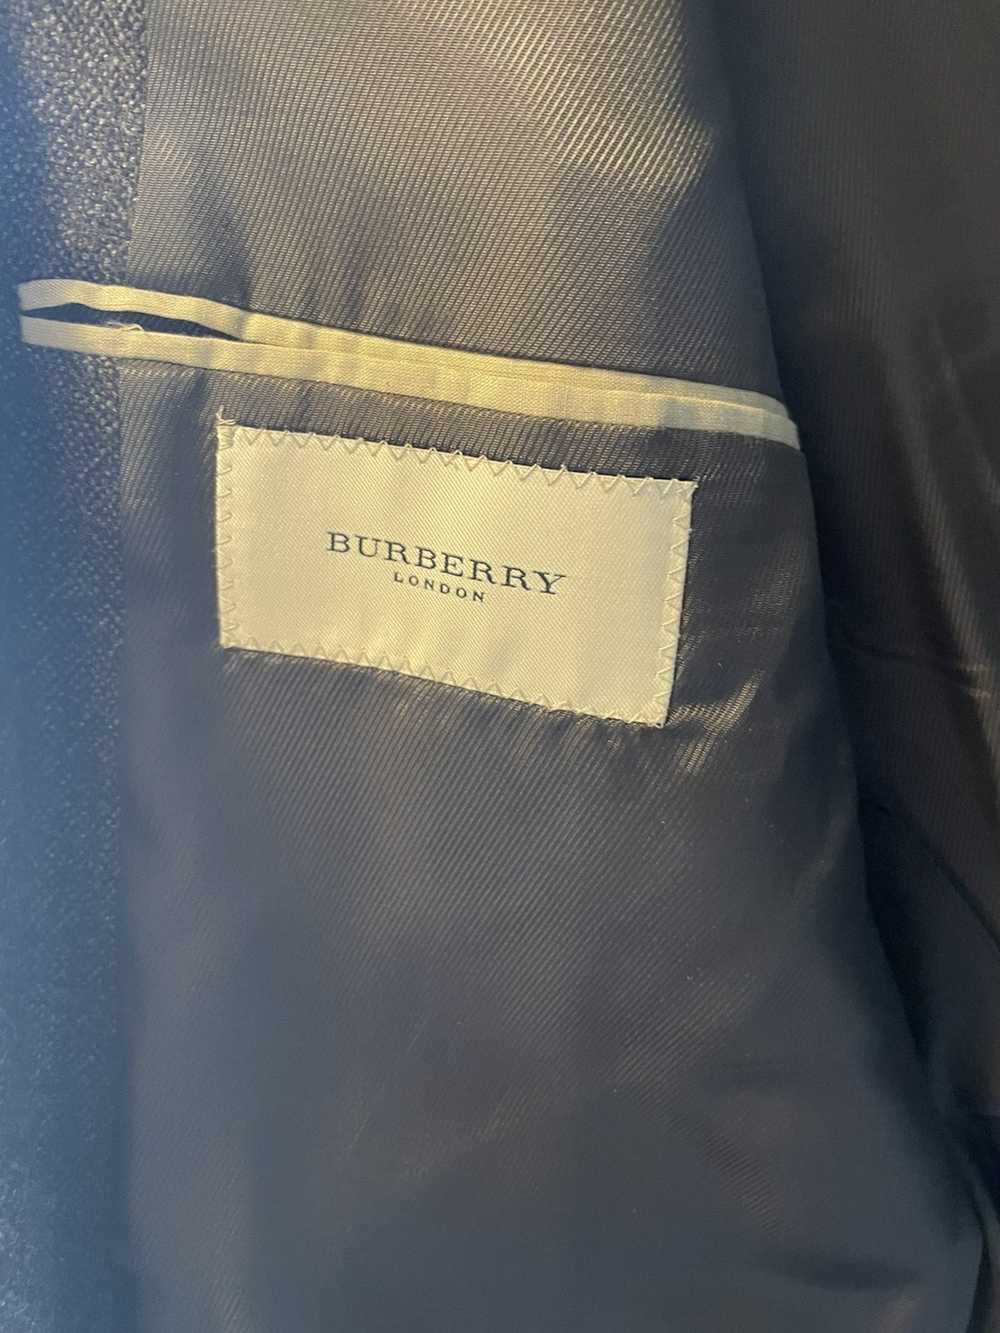 Burberry Burberry men's sport jacket in 44L - image 3